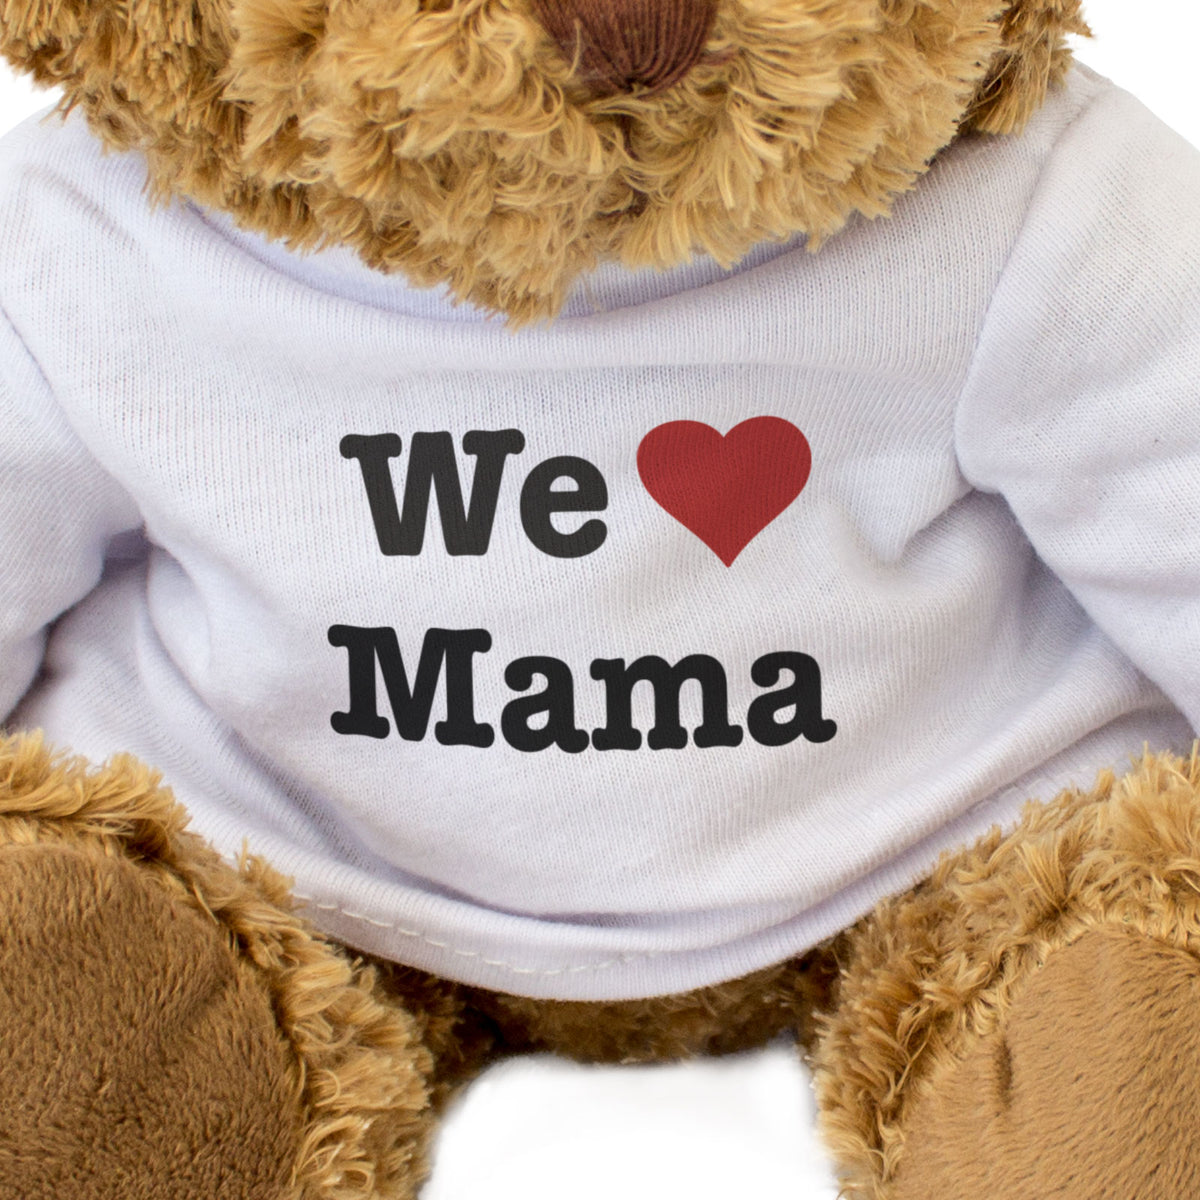 We Love Mama - Teddy Bear